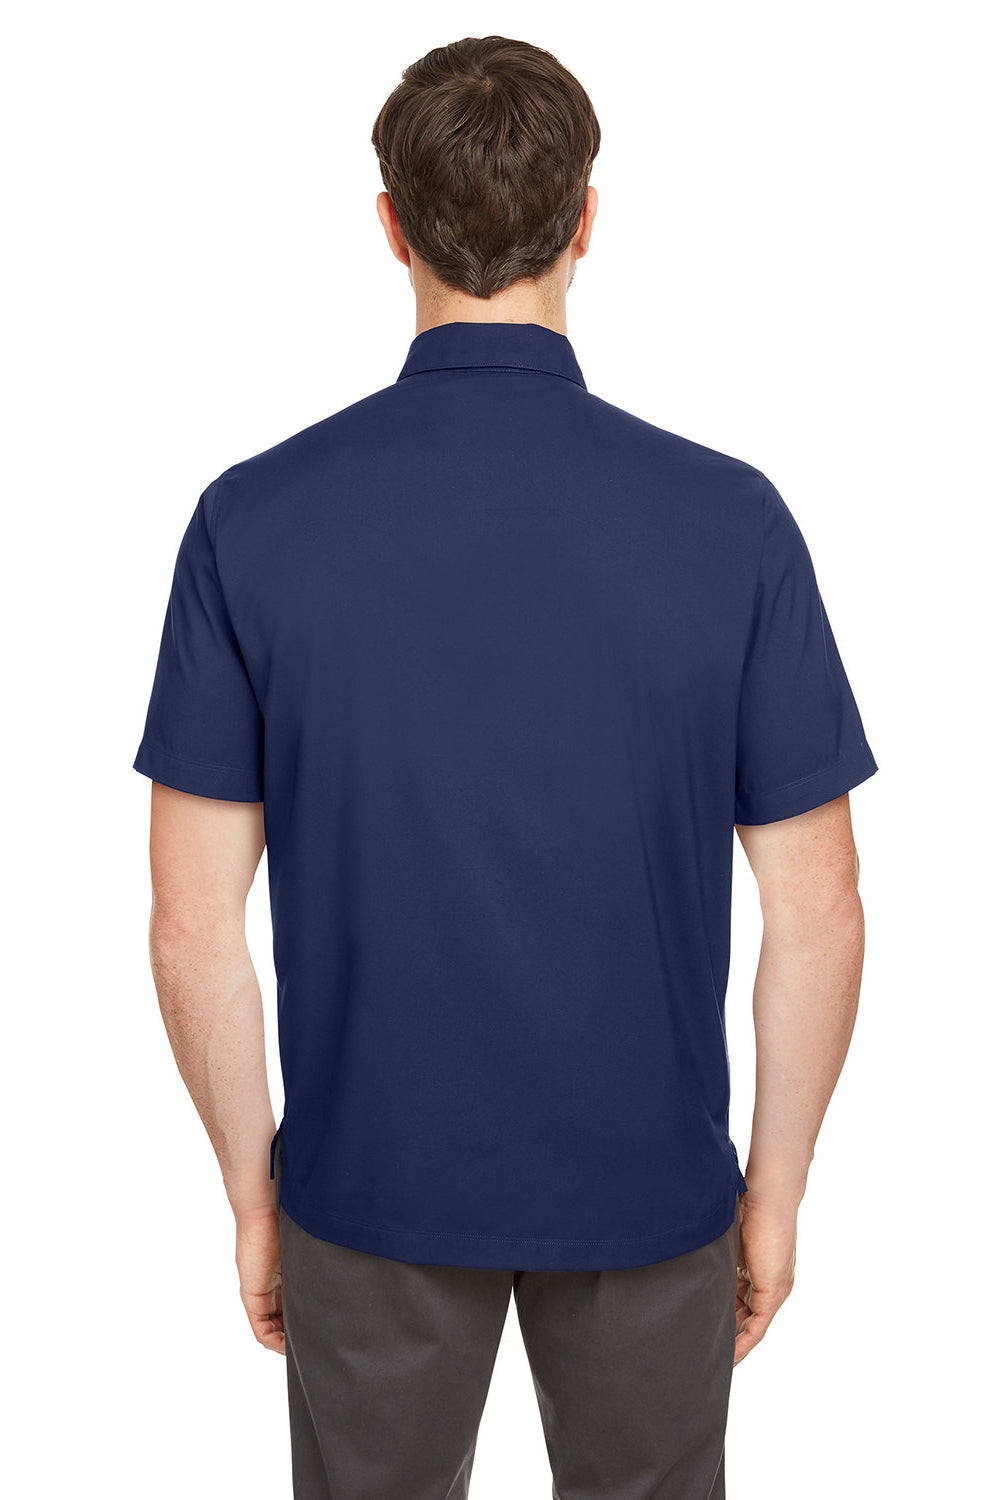 Under Armour 1351360 Mens Motivate Moisture Wicking Short Sleeve Button Down Shirt w/ Pocket Midnight Navy Blue Model Back